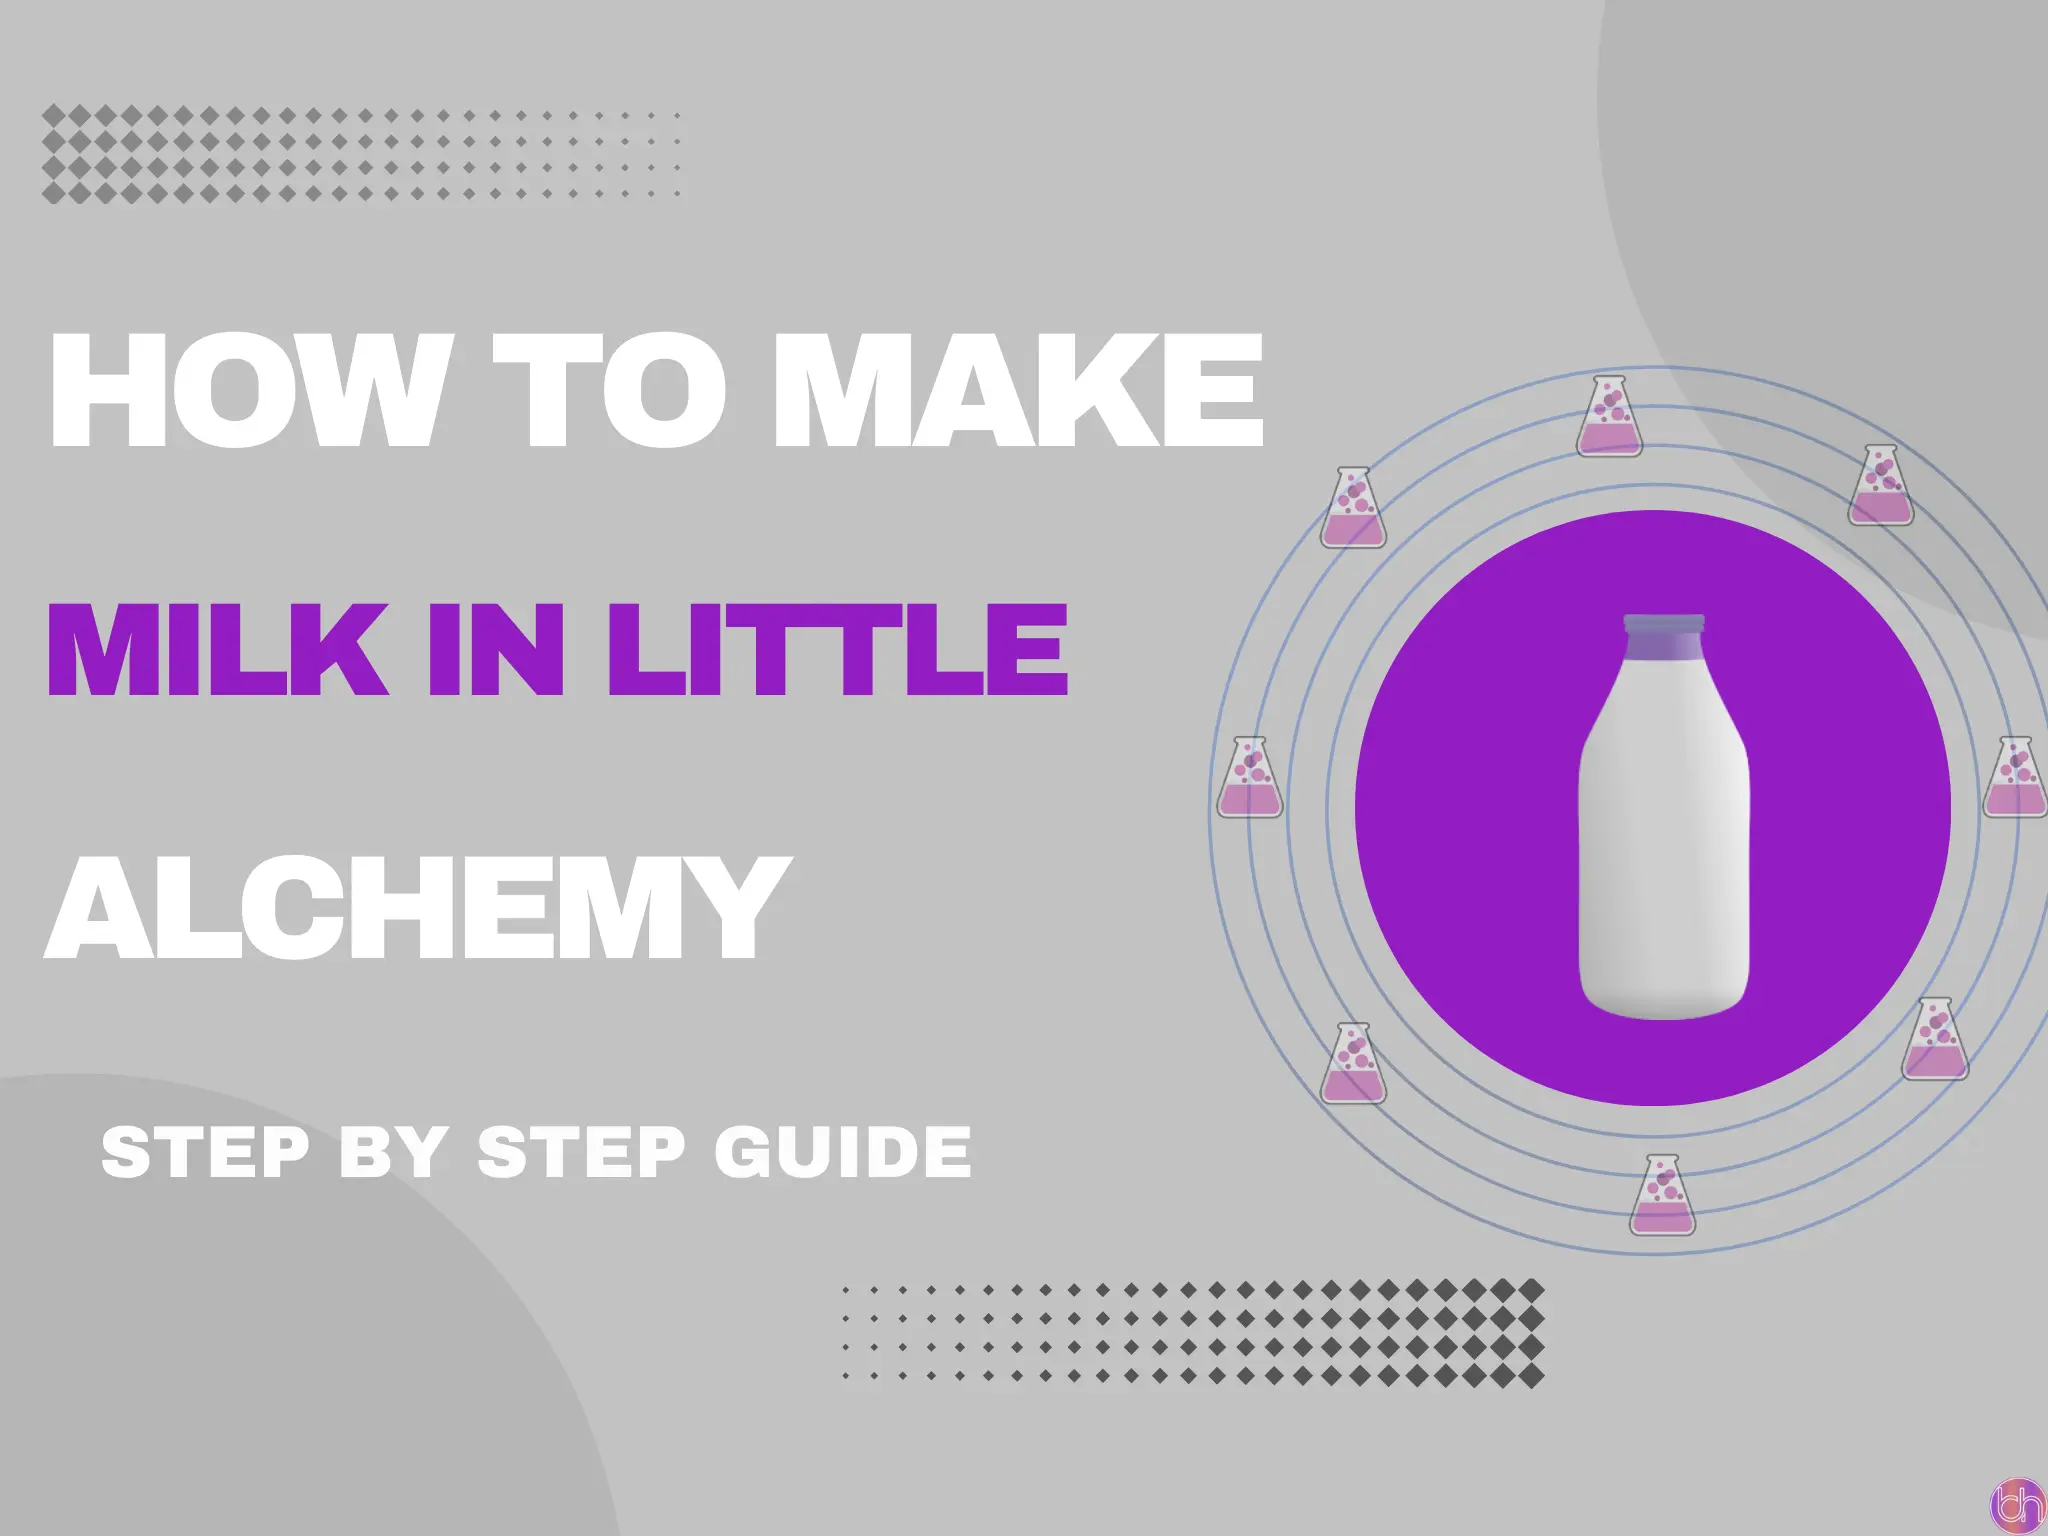 How to make Milk in little alchemy